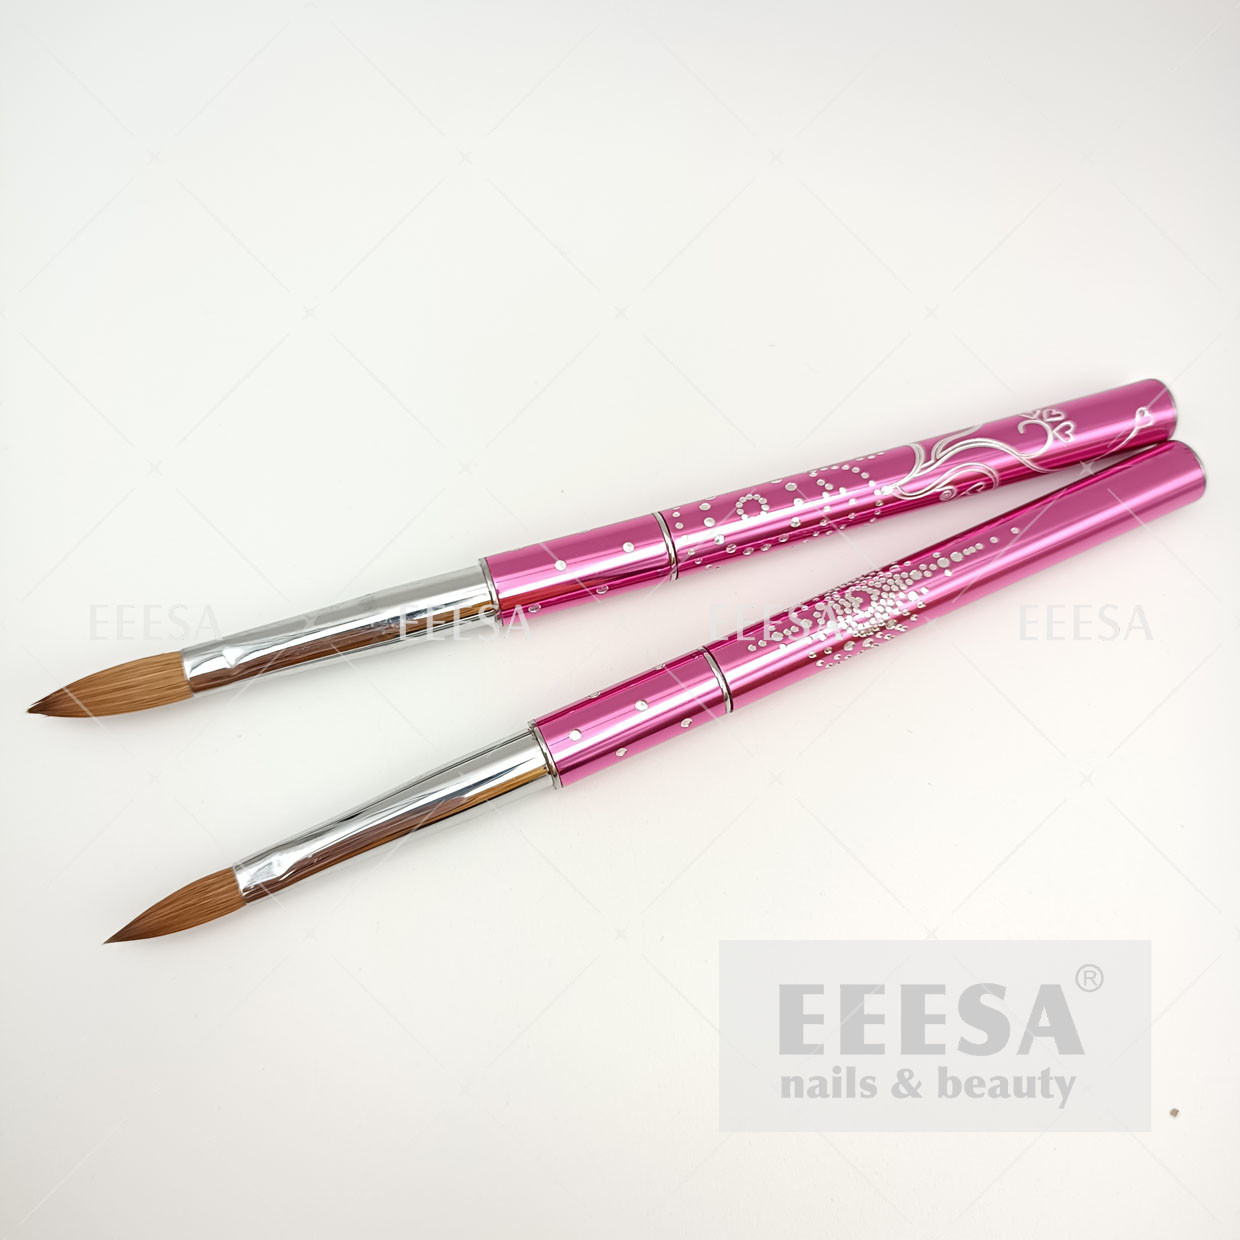 Buy cheap Custom bling line dot heart decoration crimped kolinsky pink acrylic nail brush from wholesalers